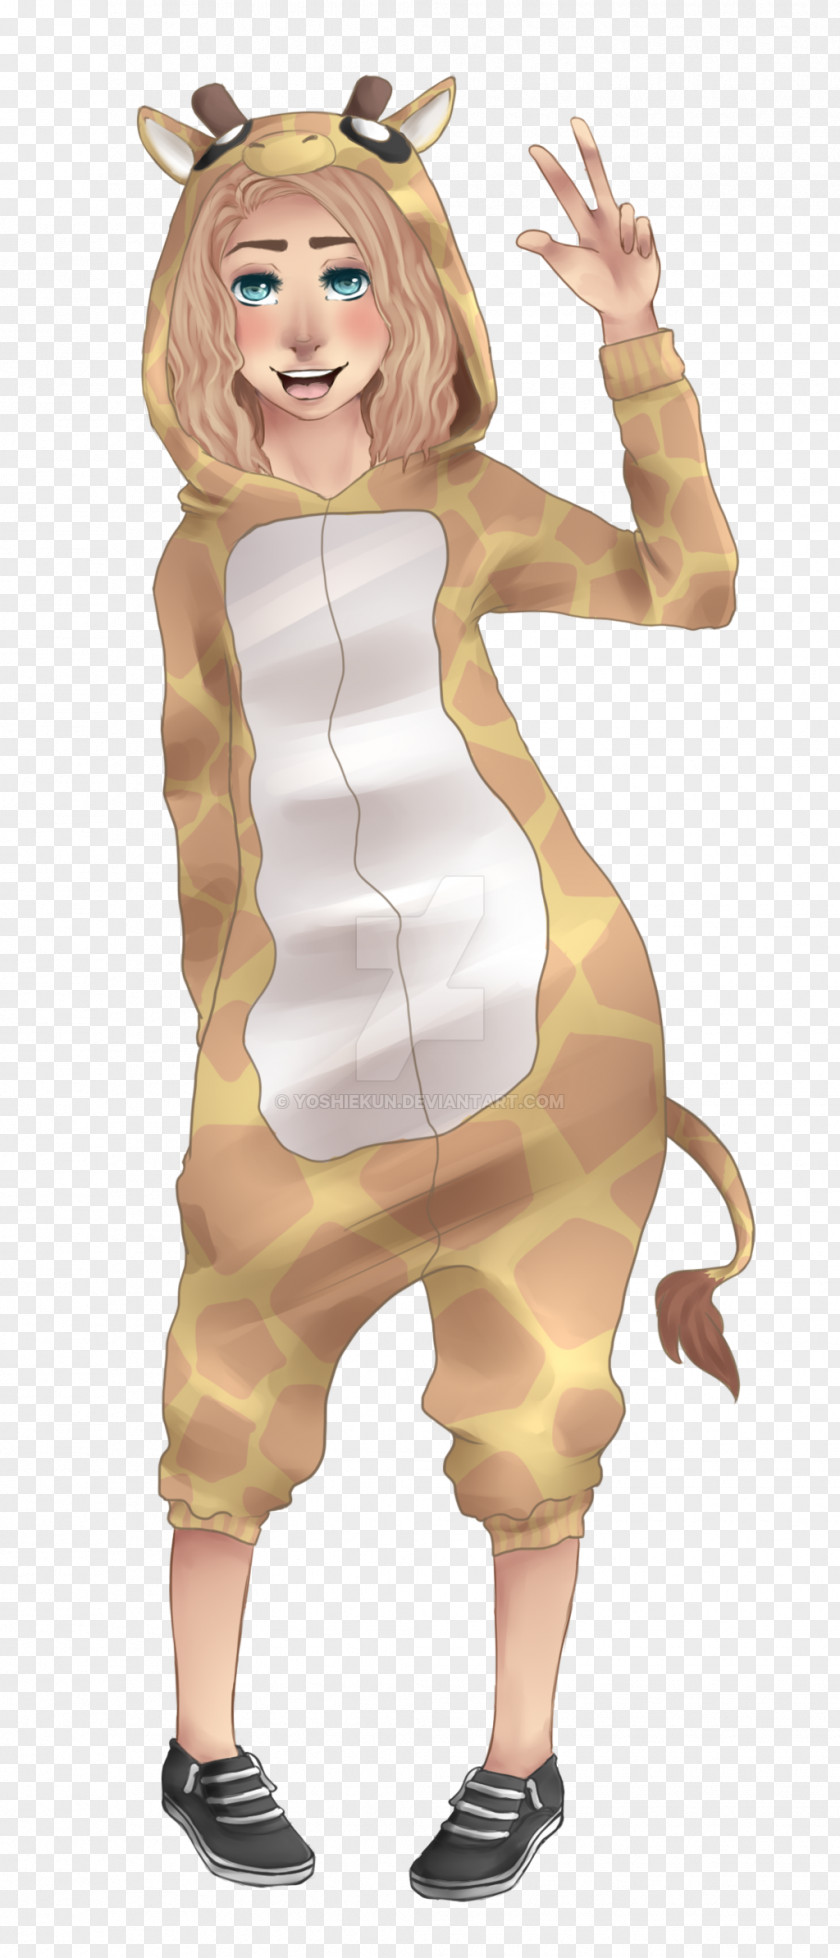 Giraffe Costume Cartoon Mascot PNG